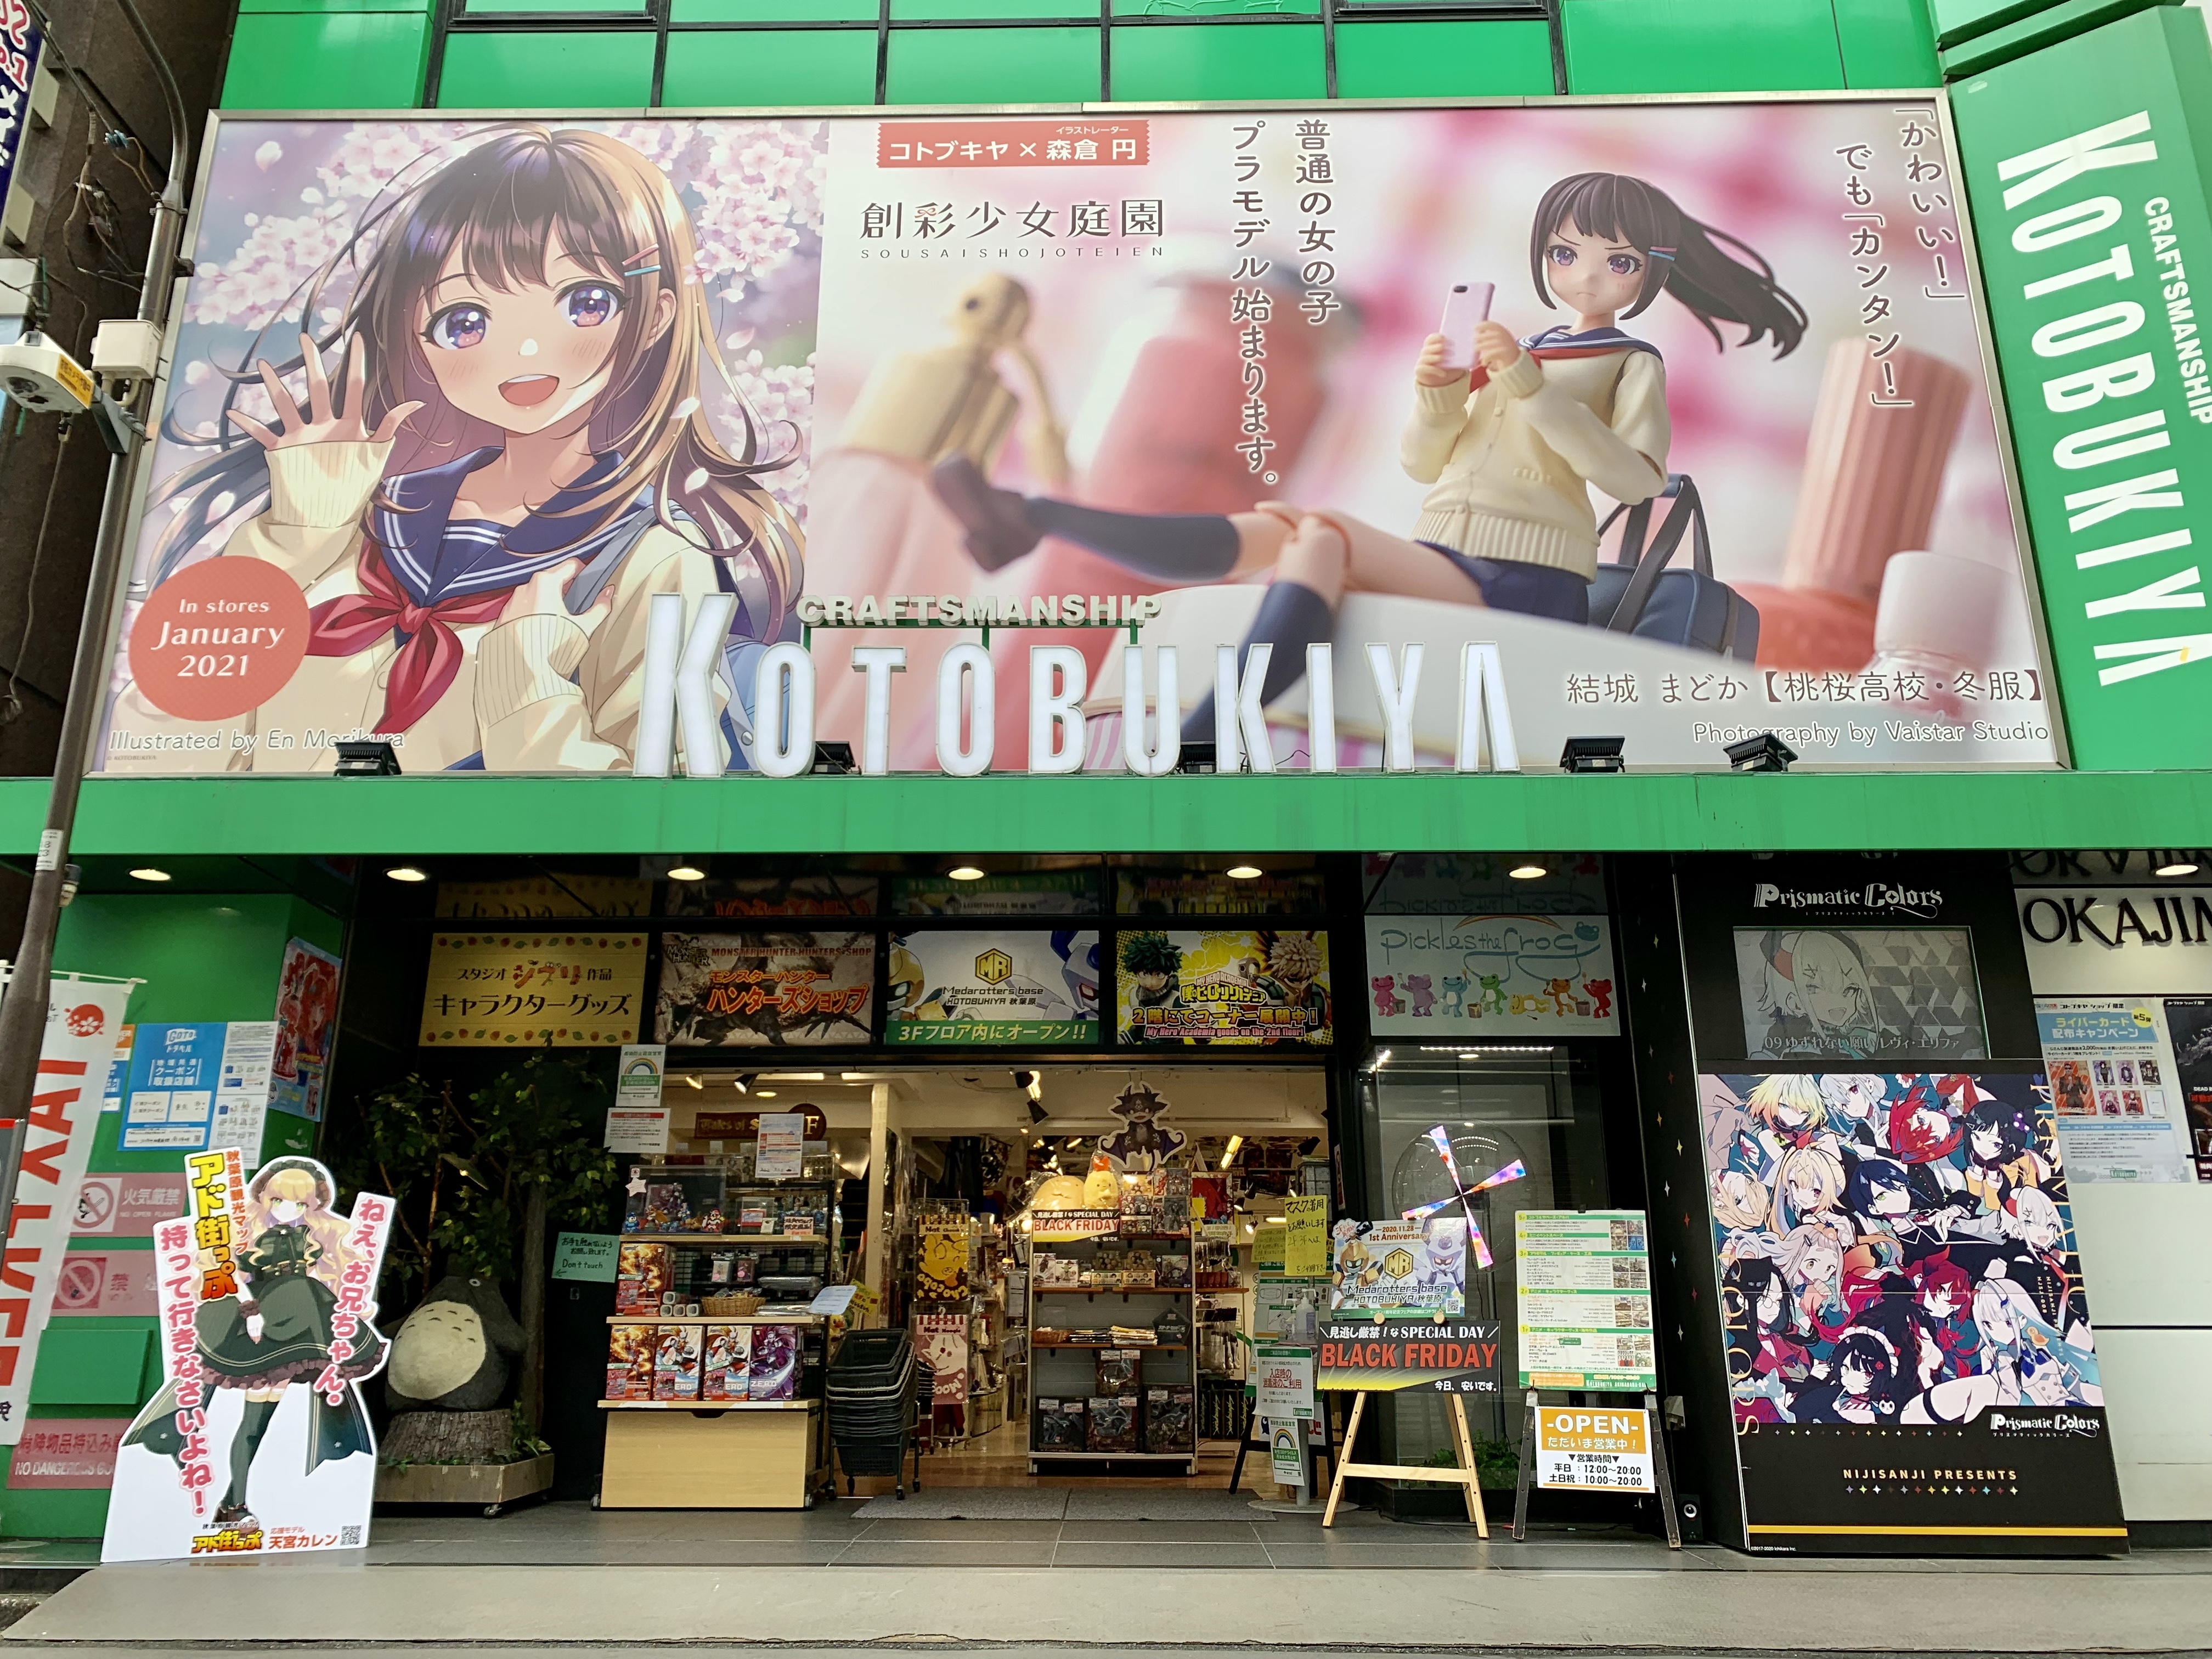 KOTOBUKIYA AKIHABARA-KAN | Japan Shopping Now